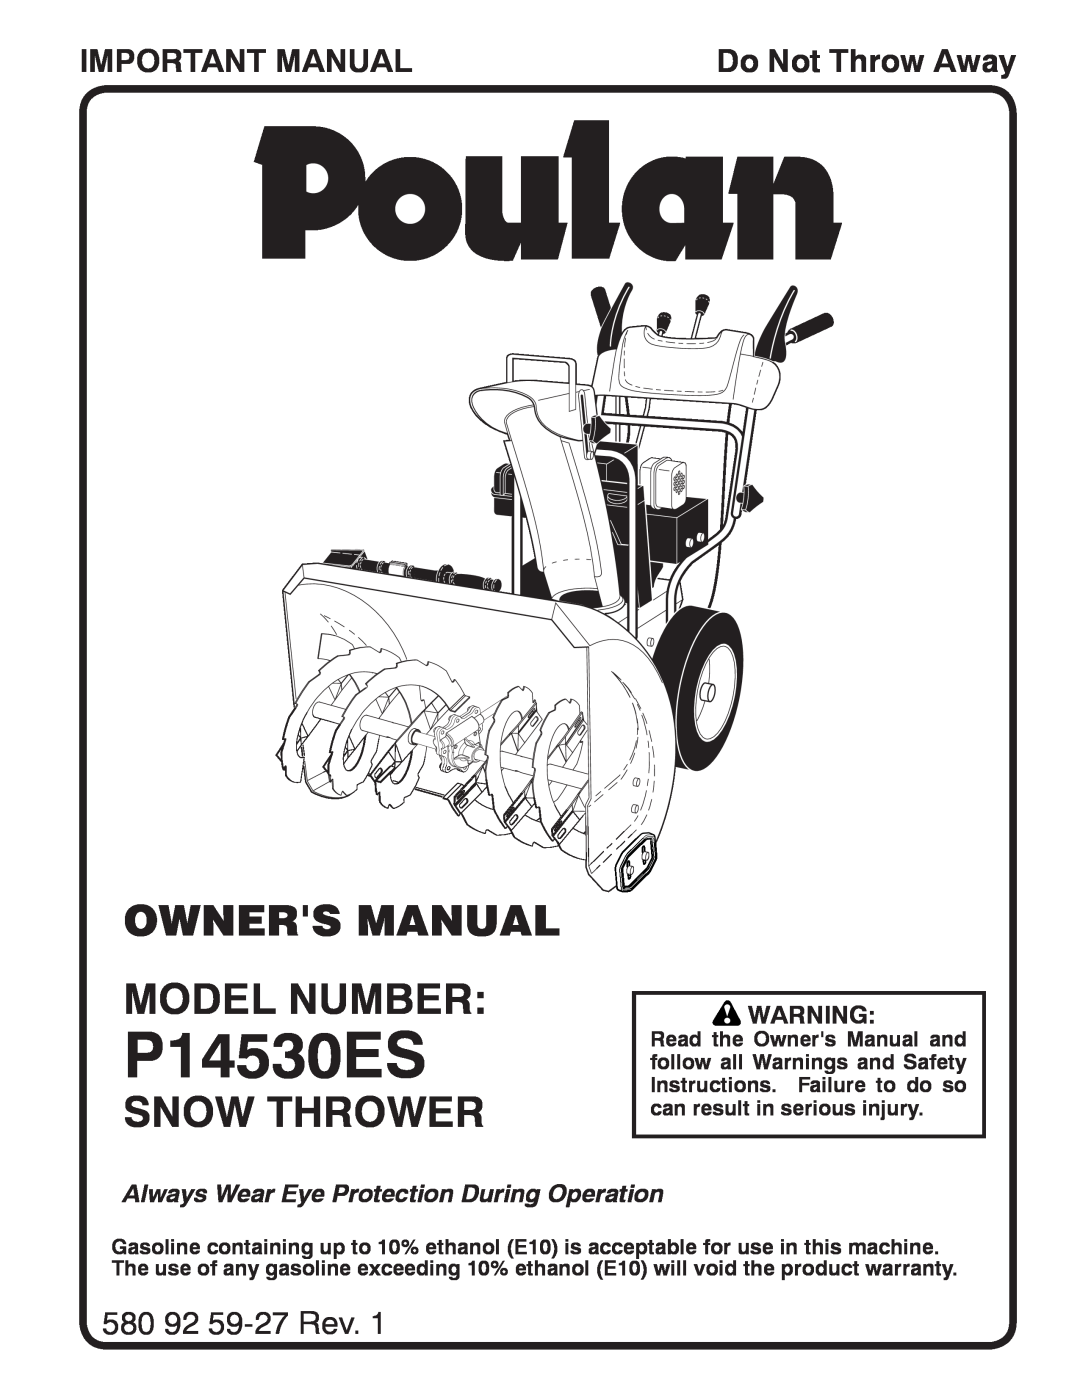 Poulan P14530ES owner manual Snow Thrower, Important Manual, 580 92 59-27Rev, Do Not Throw Away 